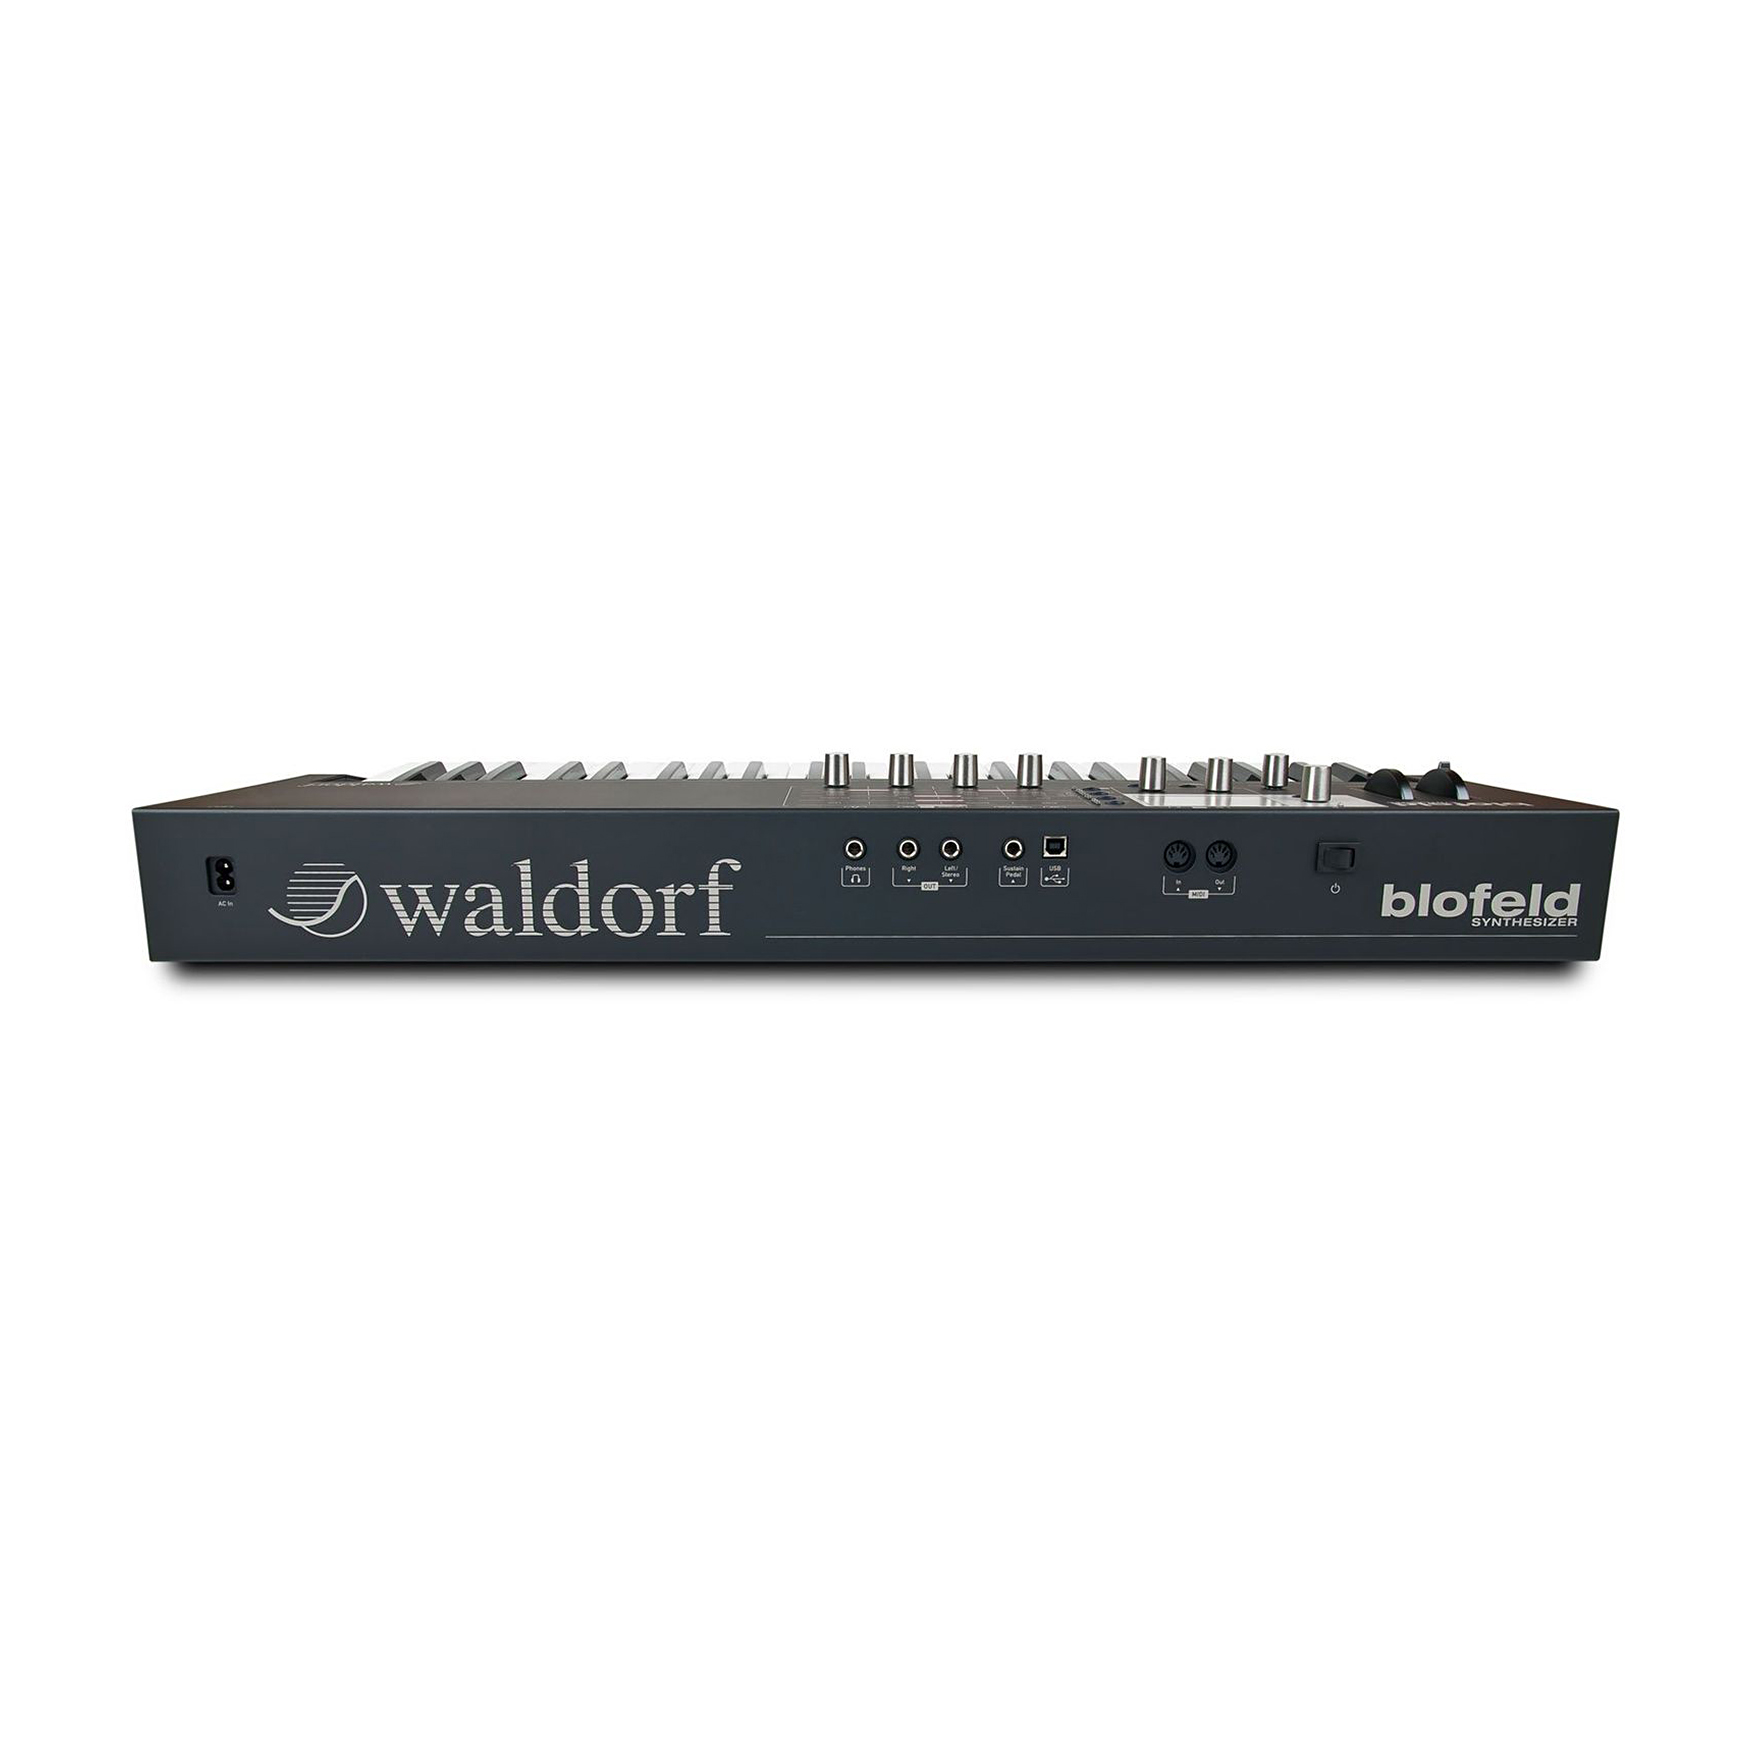 Waldorf Blofeld Keyboard Black rear